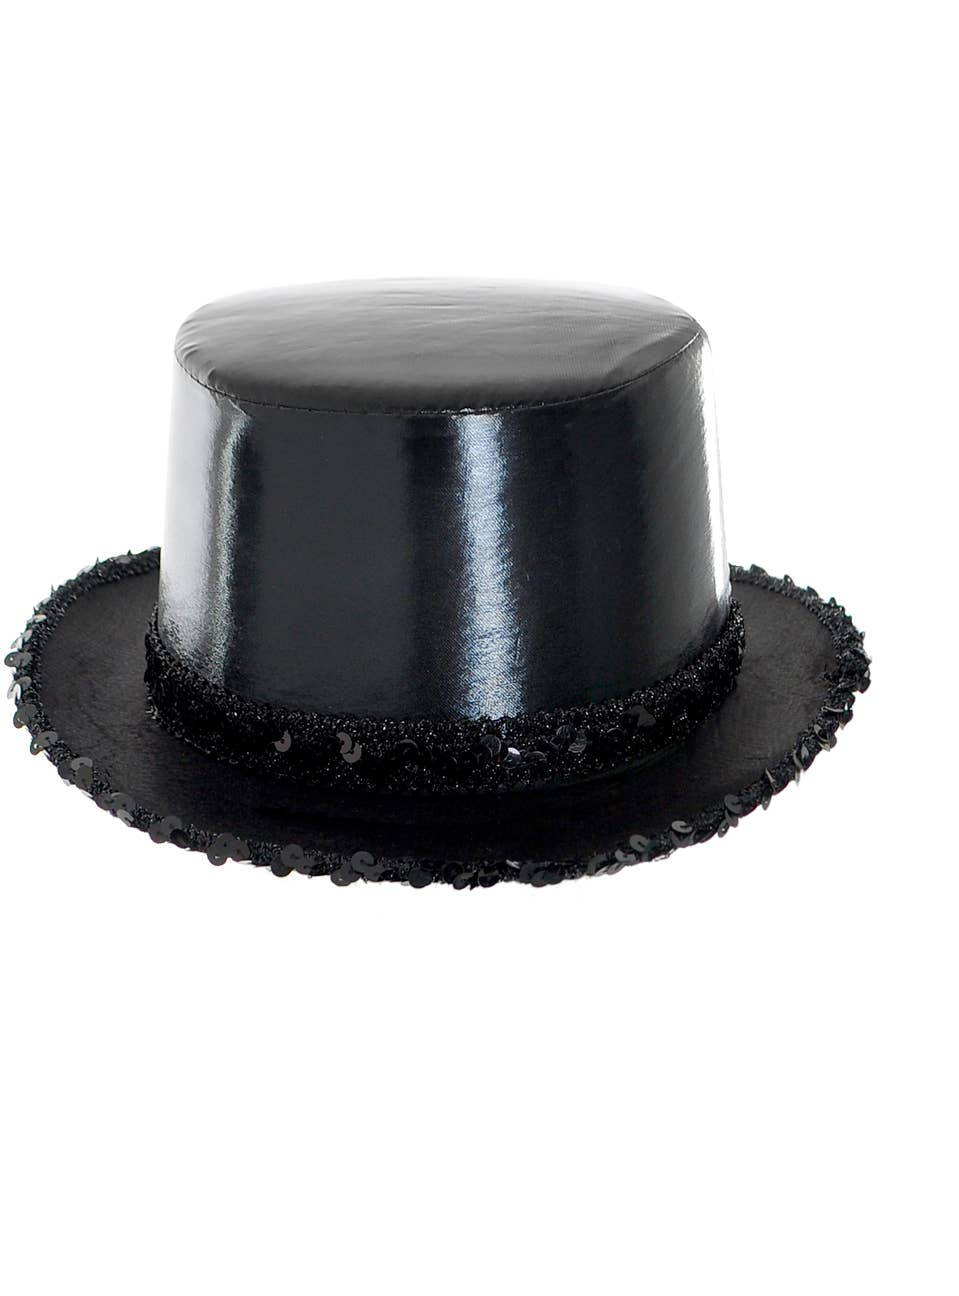 Black Wet Look Sequined Showtime Costume Top Hat Alternate Image